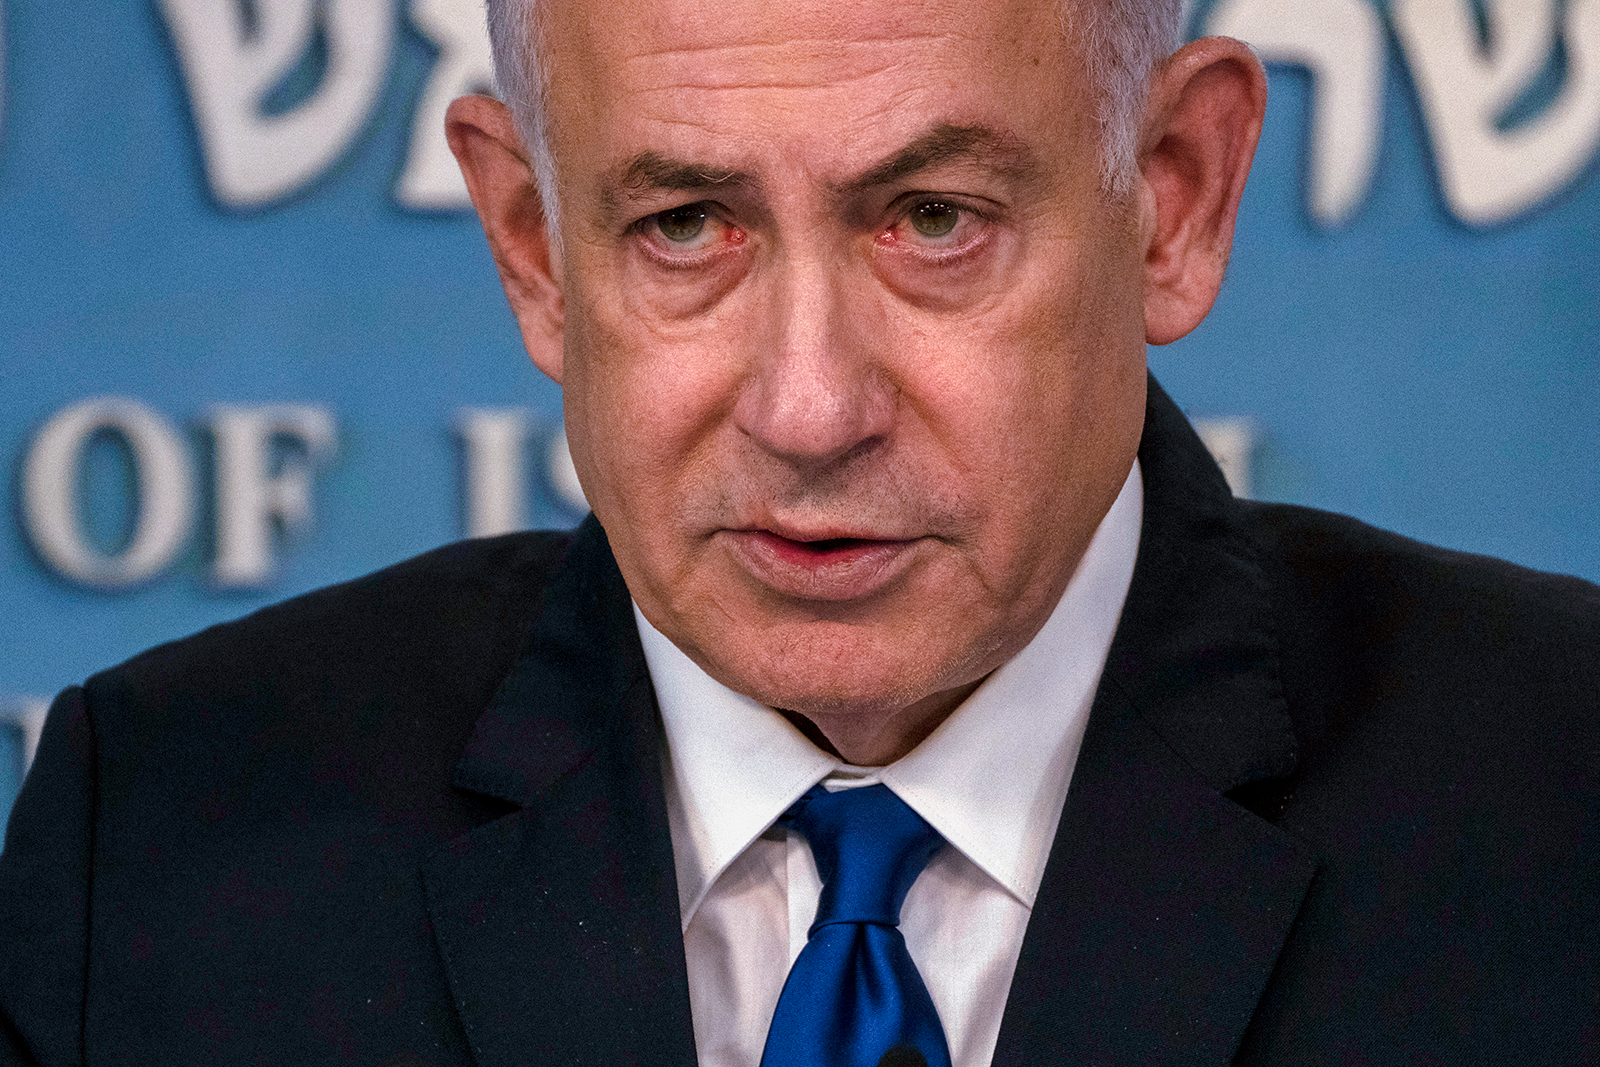  Benjamin Netanyahu speaks during a conference in Jerusalem on March 17.